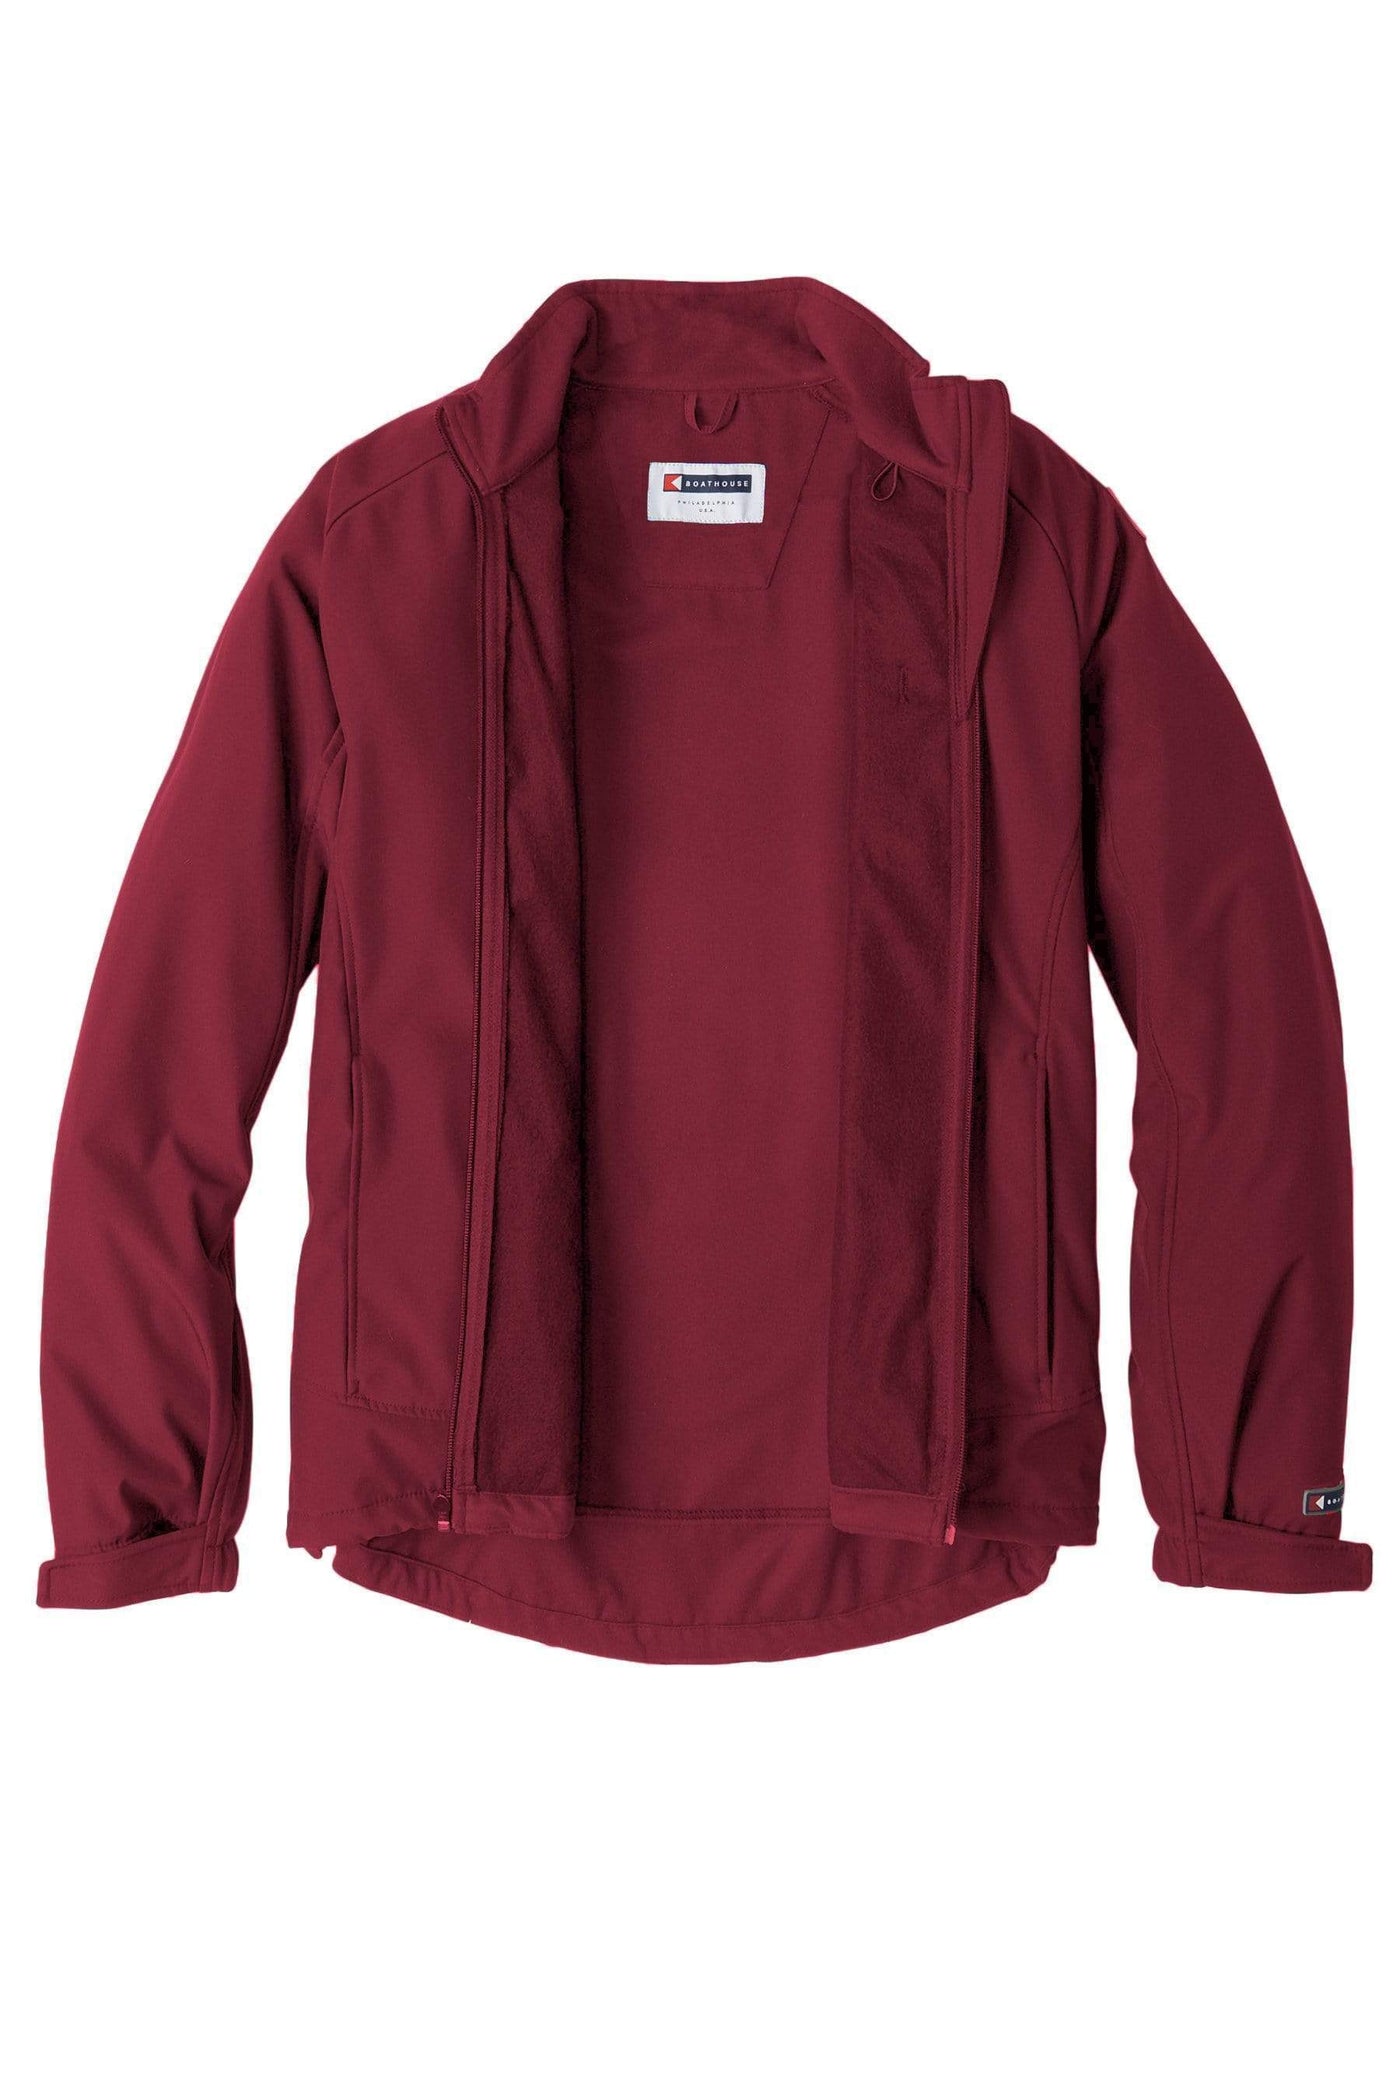 BOATHOUSE Women's Equinox Soft Shell Jacket